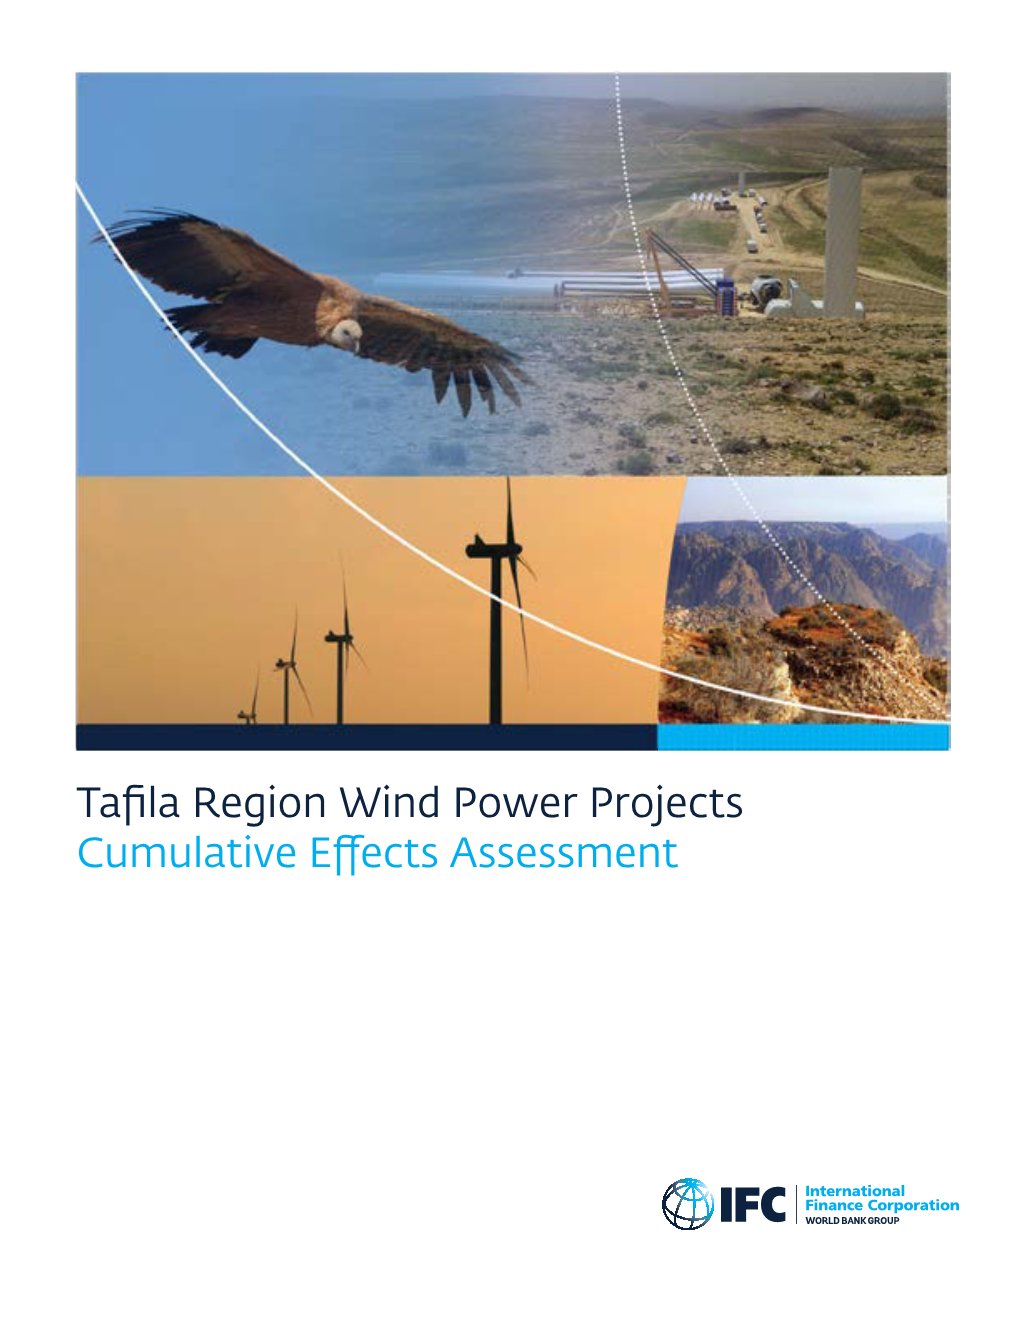 Tafila Region Wind Power Projects Cumulative Effects Assessment © International Finance Corporation 2017